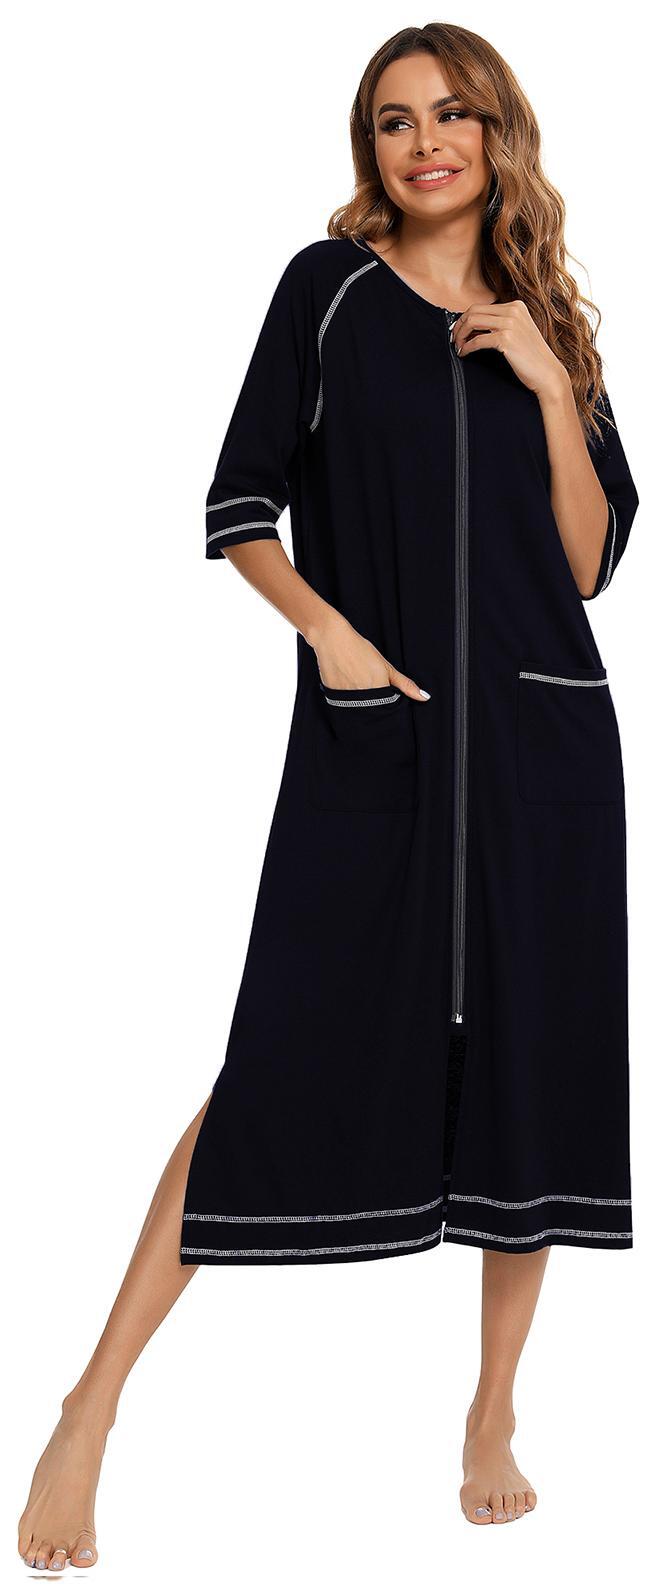 LOFIR Women Zipper Front Robes 3/4 Sleeve Loungewear Pockets Nightgown Loose-Fitting Ladies Long Sleepwear(Black,M) - image 1 of 5